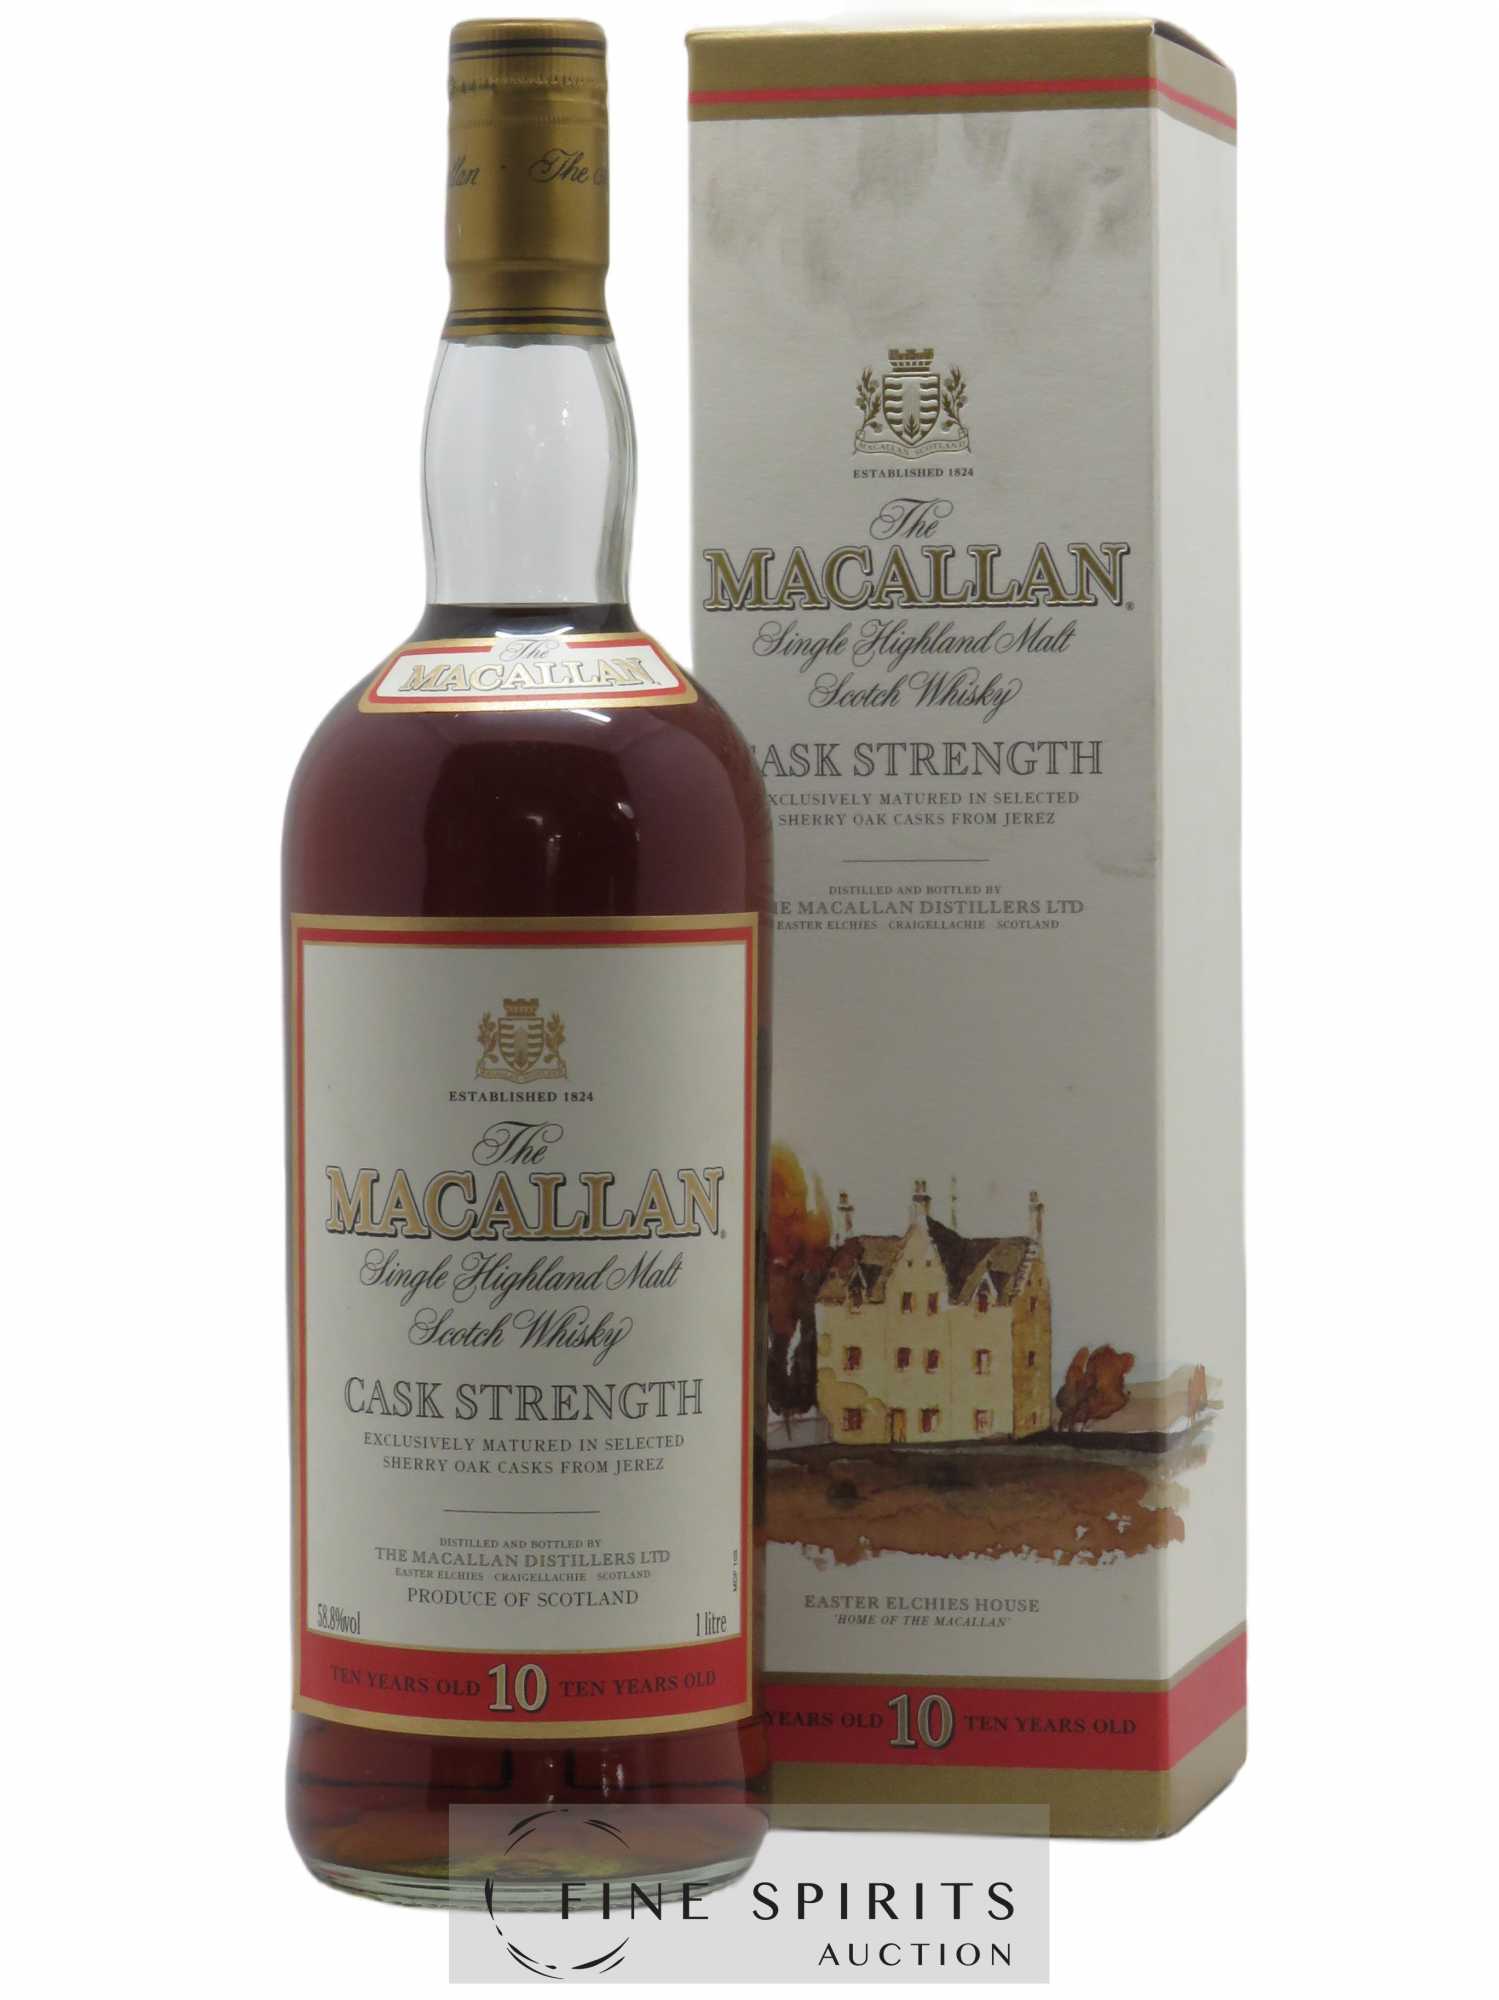 Macallan (The) 10 years Of. Cask Strength Sherry Oak Casks